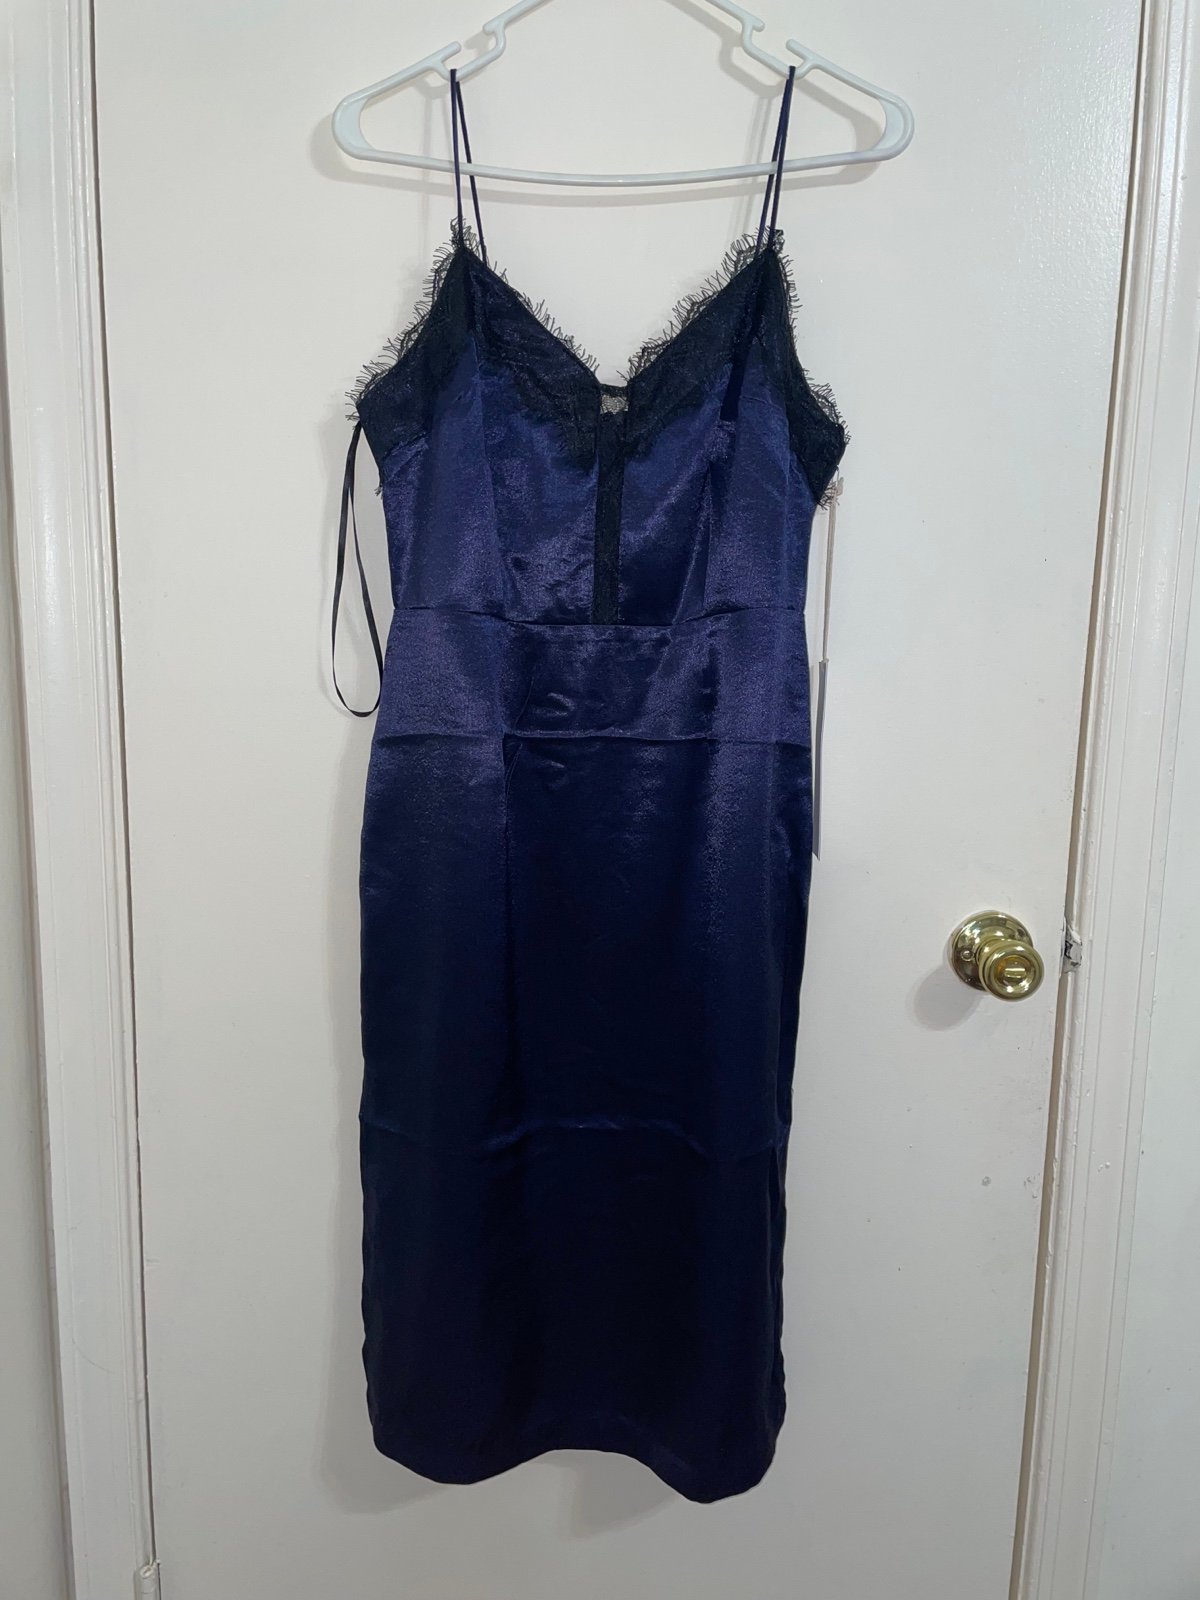 Blue Lace dress 5S6gkhFh1